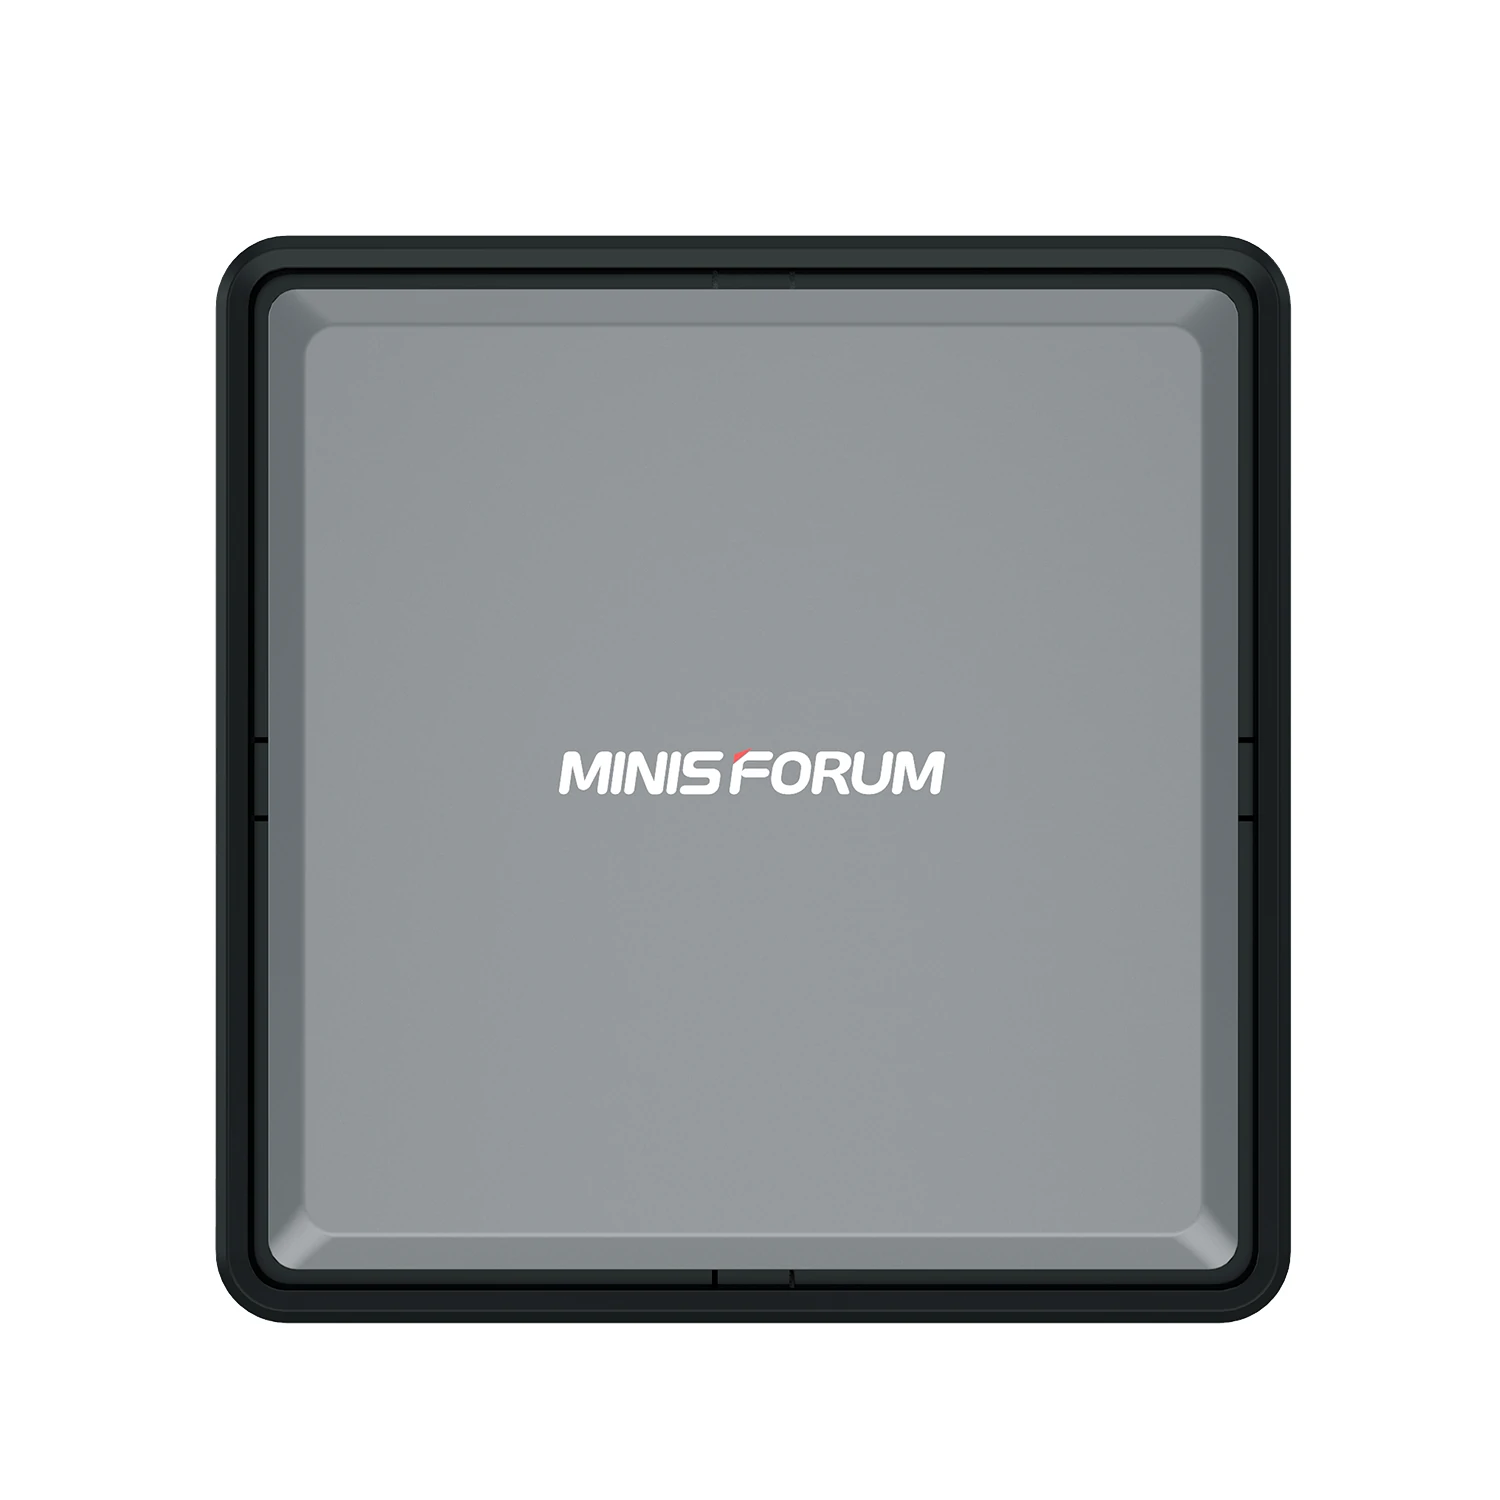 Find Minisforum HM80 Mini PC 16GB DDR4 256GB SSD AMD Ryzenâ„¢ 7 4800U Processor Octa Core Windows 10 Pro Dual Band Wi Fi Bluetooth Support 1000M 2500M LAN 4K Output for Sale on Gipsybee.com